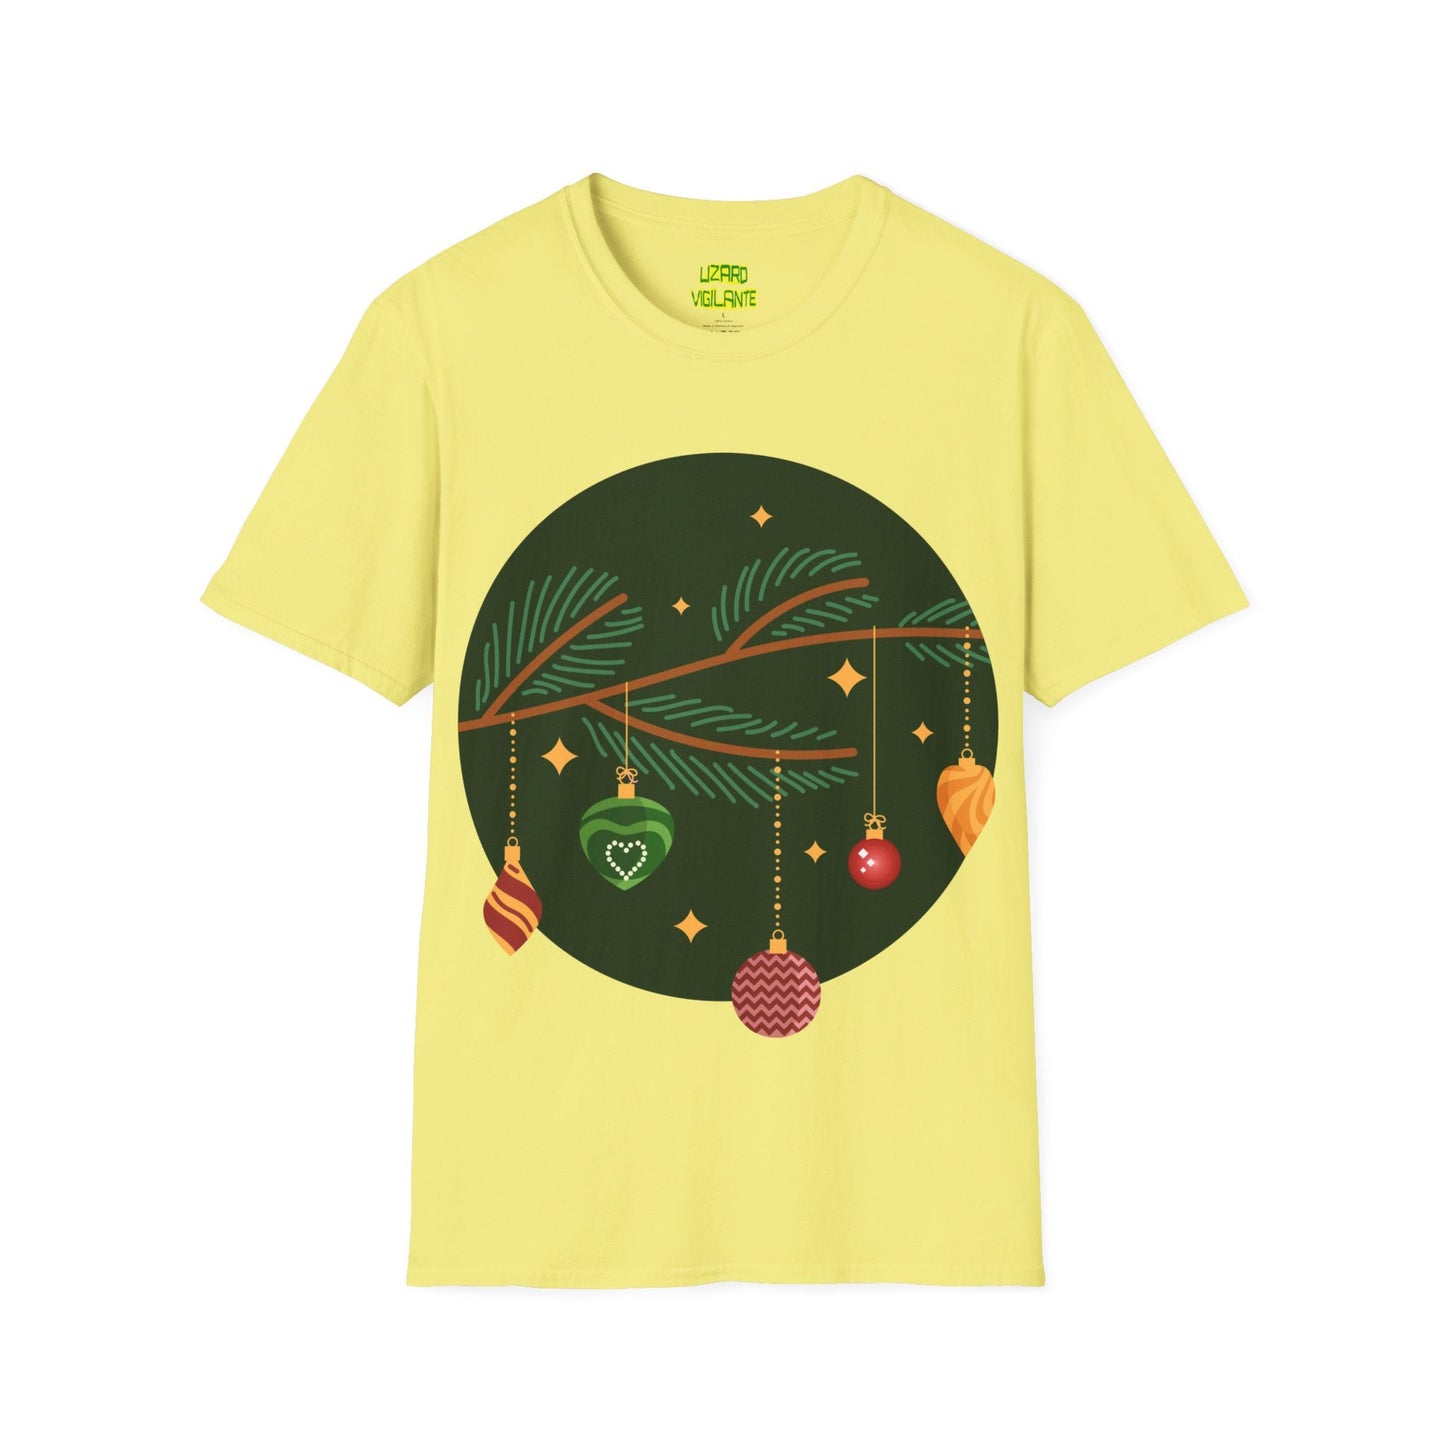 Decorated Christmas Tree Branch Unisex Softstyle T-Shirt - Lizard Vigilante